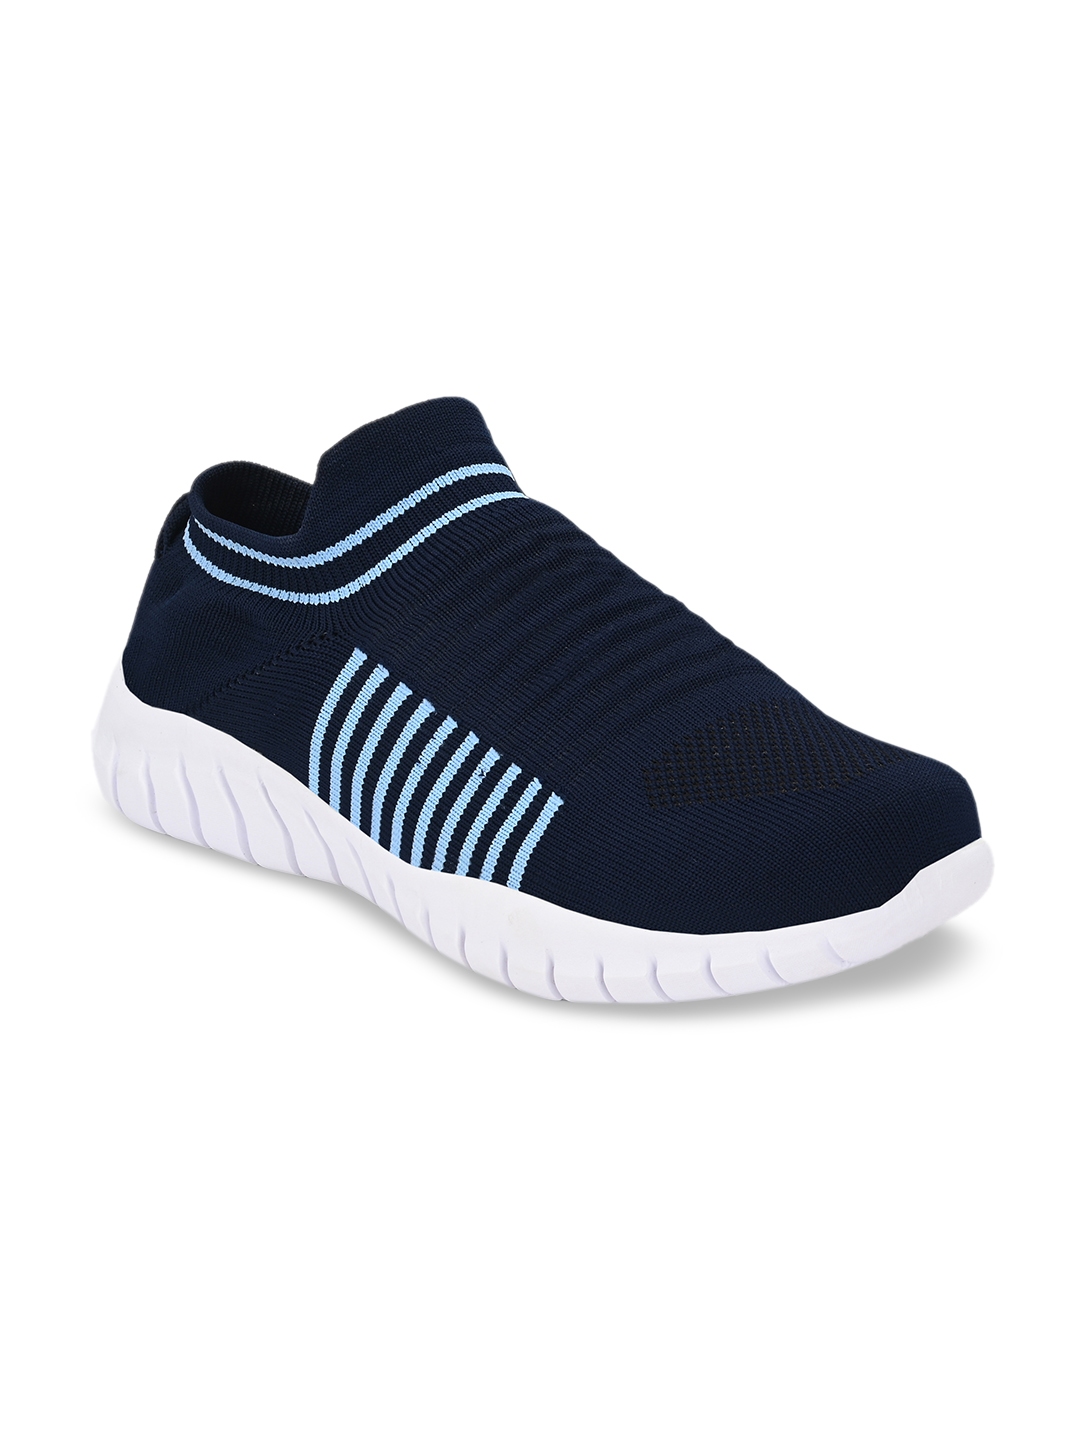 Buy MENGLER Men Navy Blue Textile Walking Shoes - Sports Shoes for Men ...